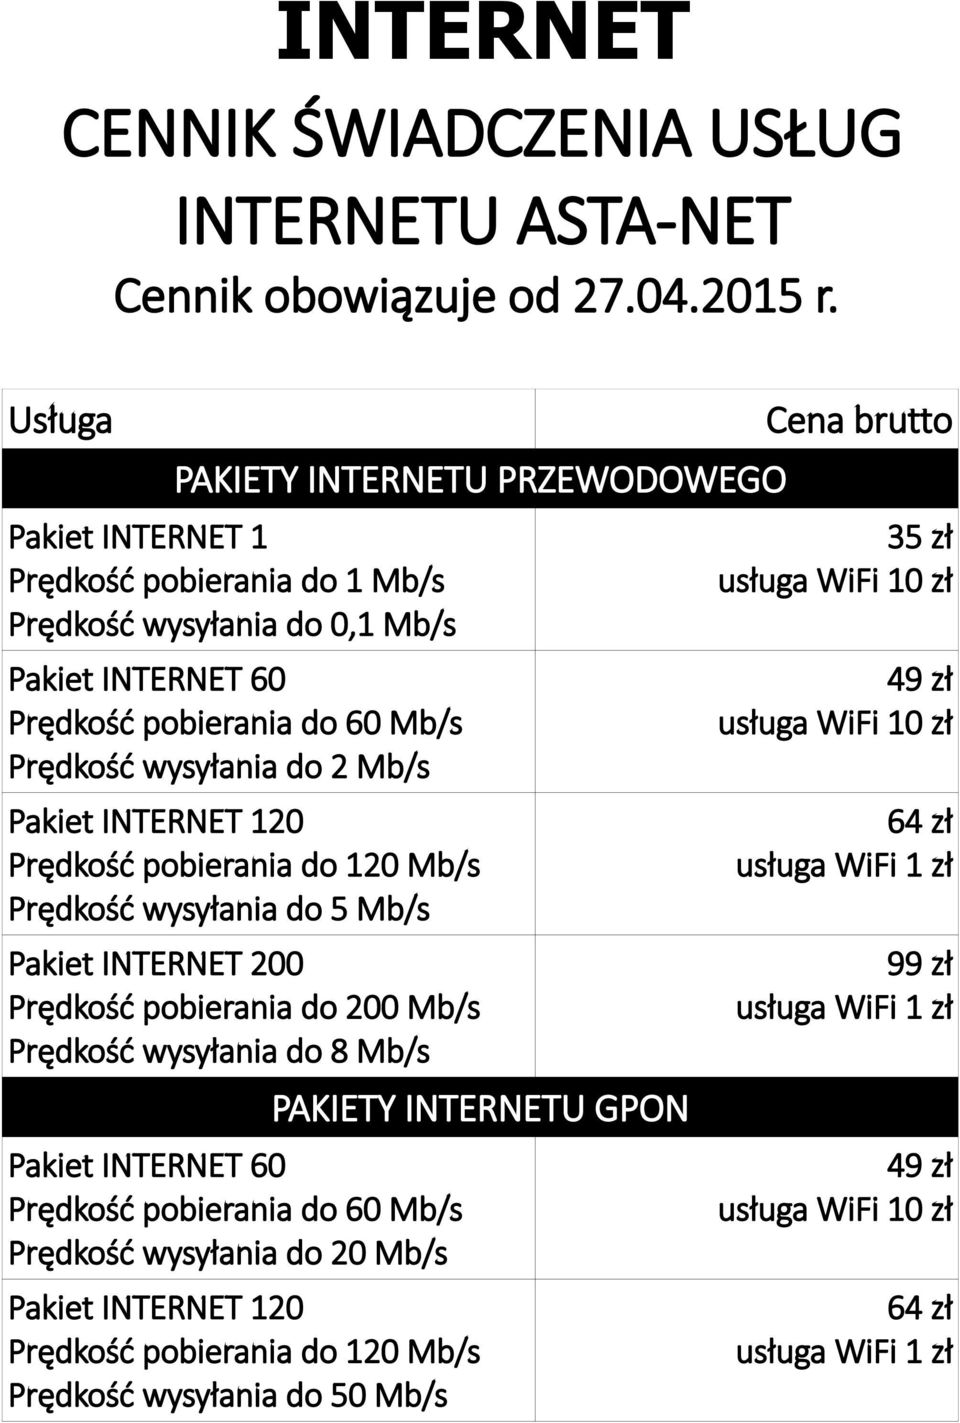 2 Mb/s Pakiet INTERNET 120 Prędkość pobierania do 120 Mb/s Prędkość wysyłania do 5 Mb/s Pakiet INTERNET 200 Prędkość pobierania do 200 Mb/s Prędkość wysyłania do 8 Mb/s Pakiet INTERNET 60